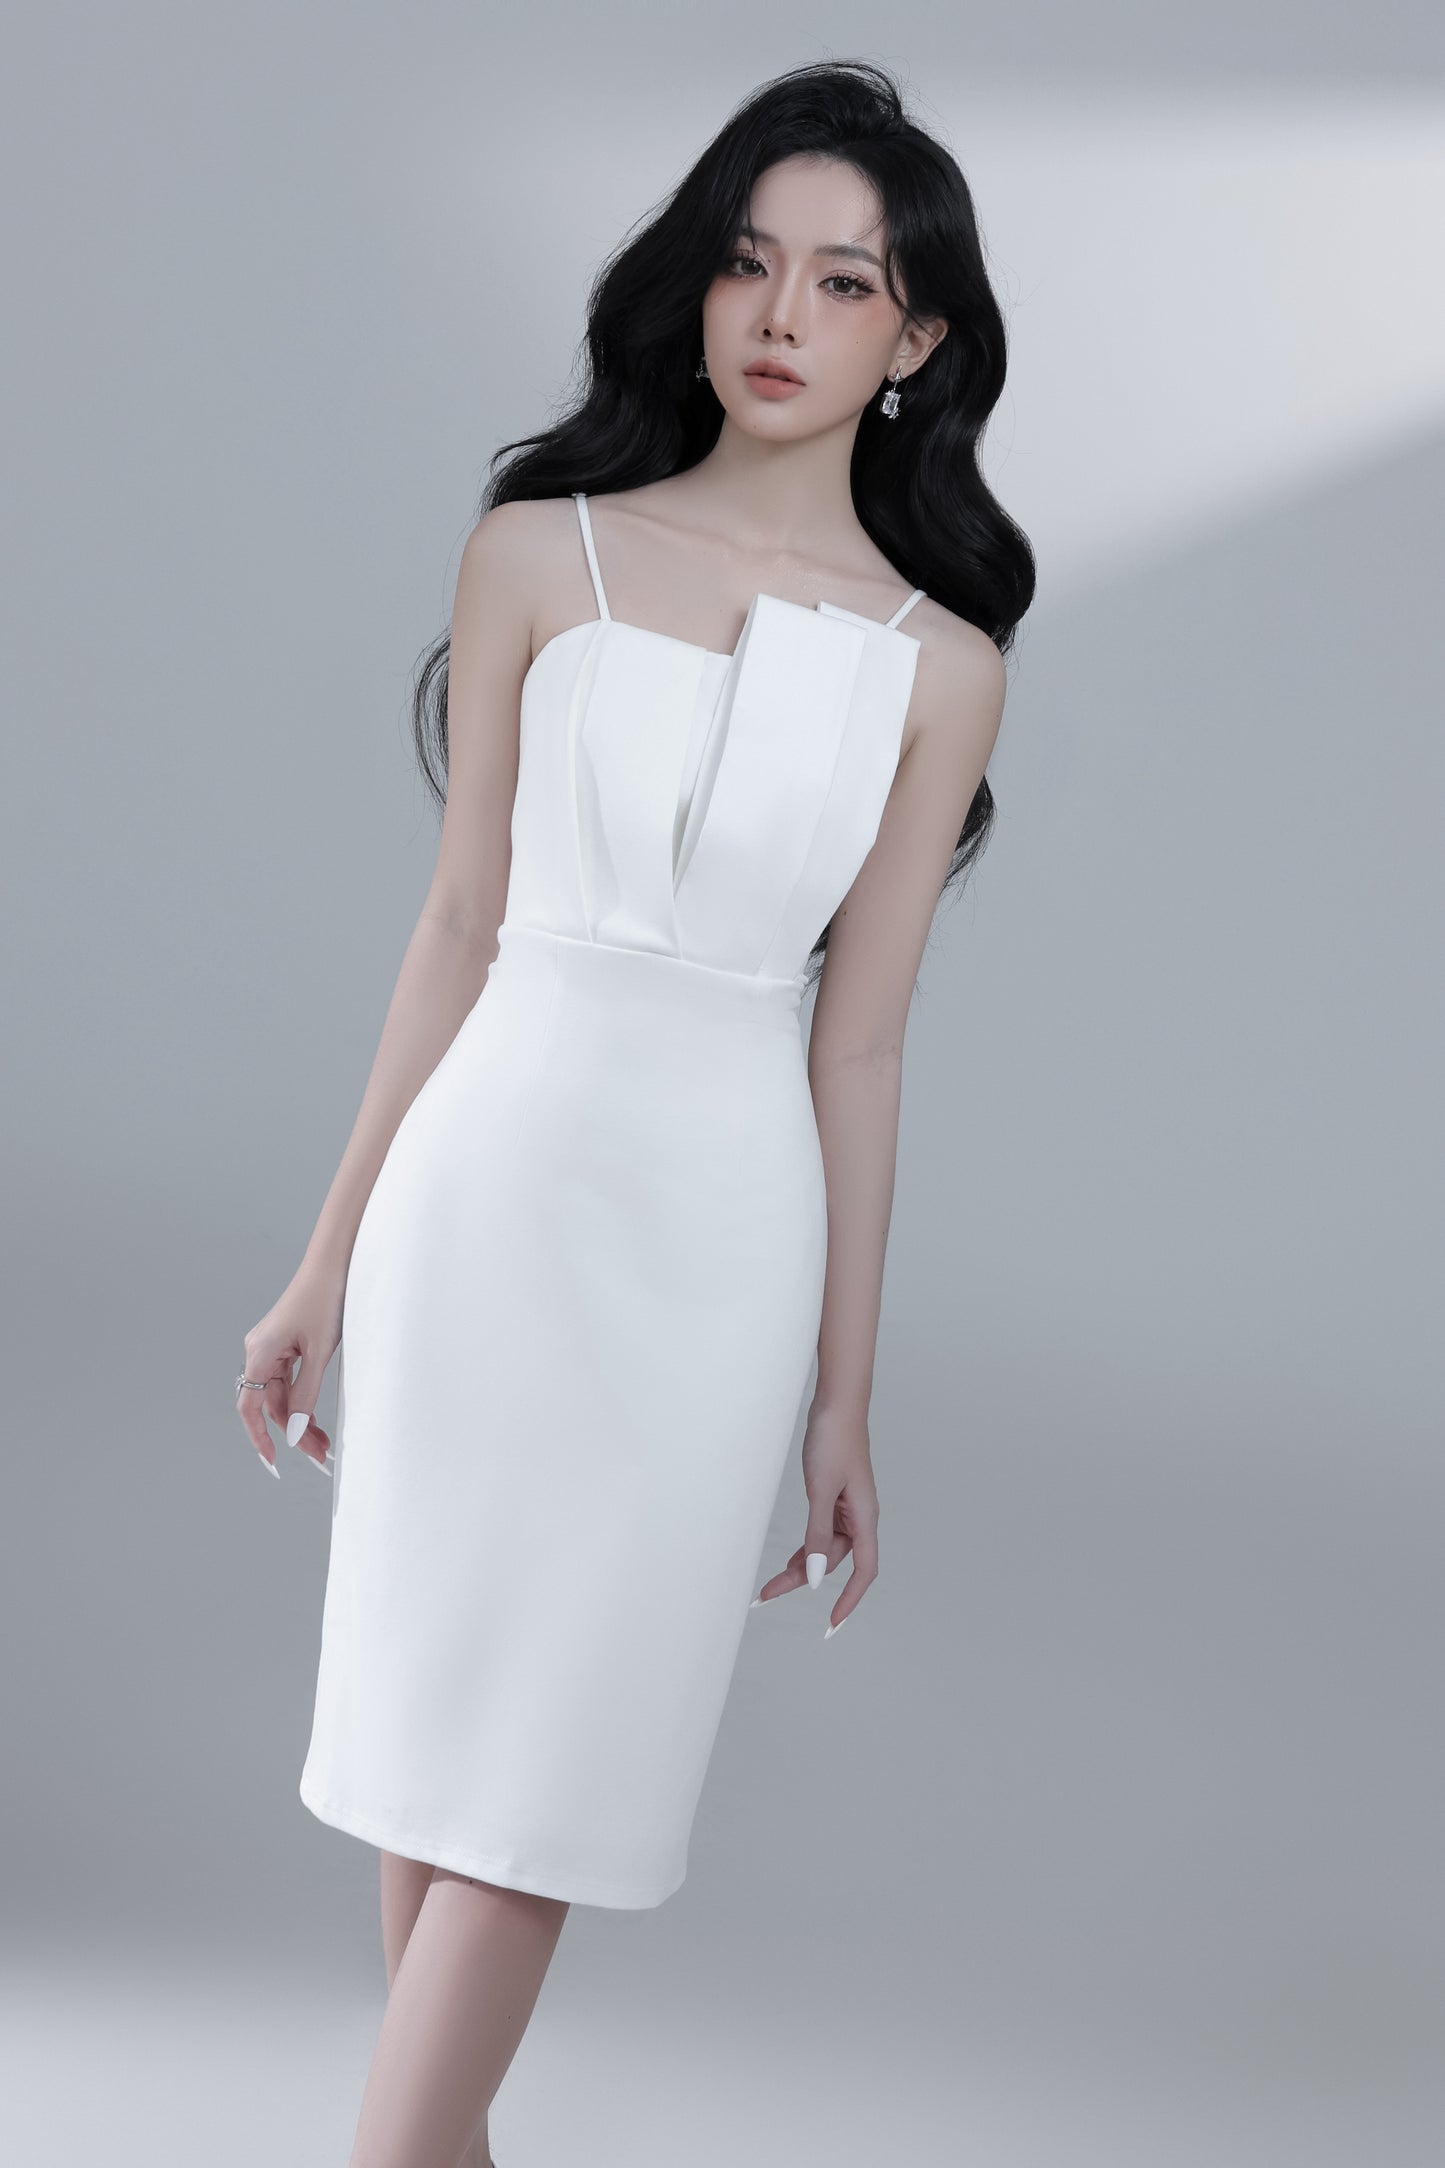 Irabelle Overlay Bodycon Dress in White